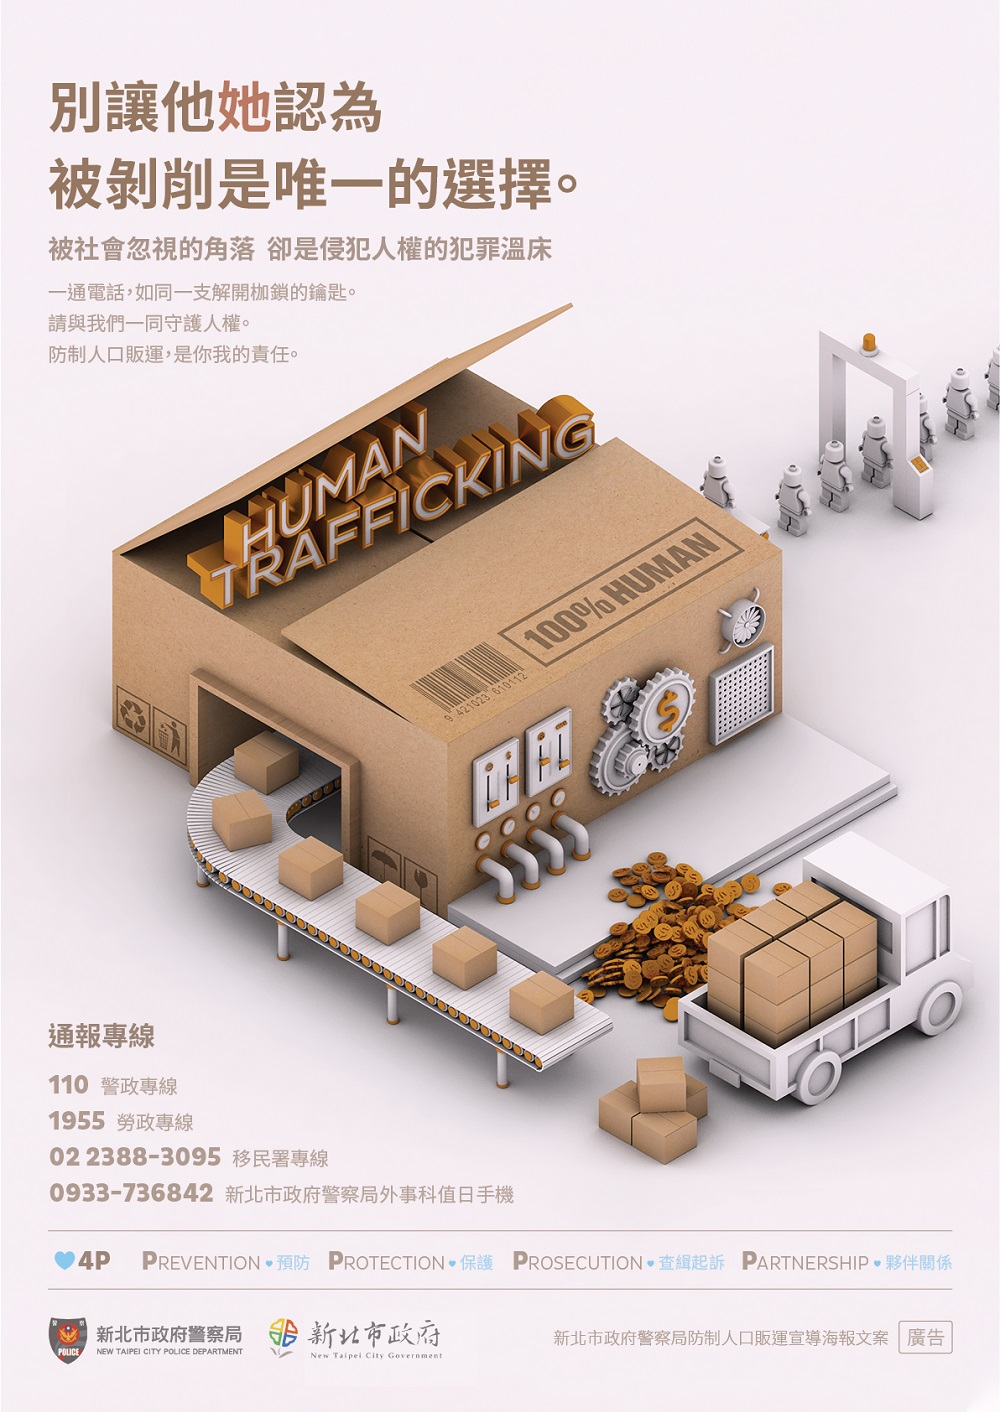 anti-human trafficking Propaganda poster picture in  Chinese